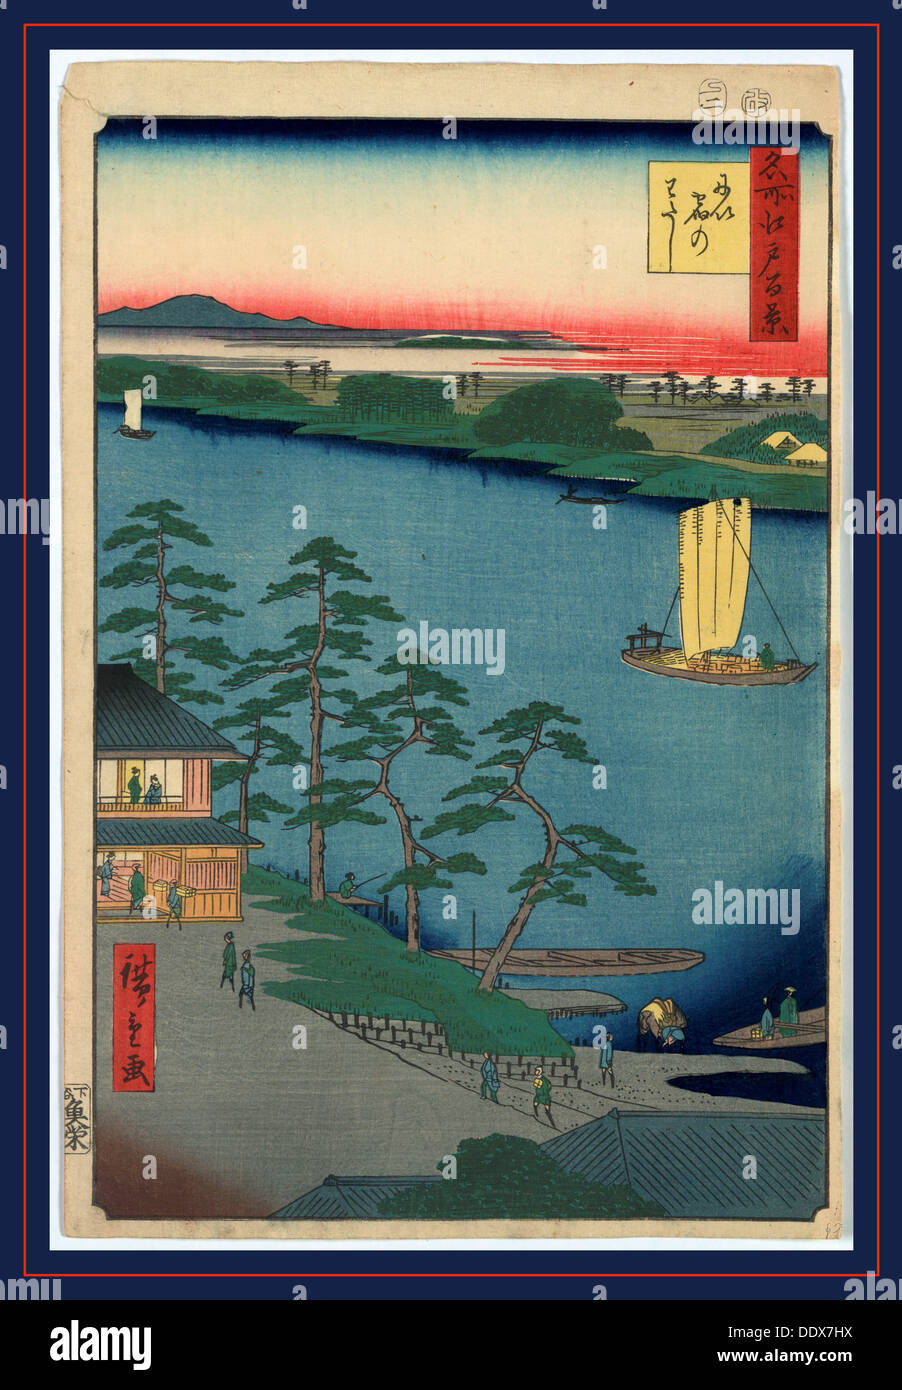 Niijuku no watashi, Niishuku Ferry. 1857., 1 print : woodcut, color ; 36.3 x 23.9 cm., Print shows the terminal at the Niijuku Stock Photo